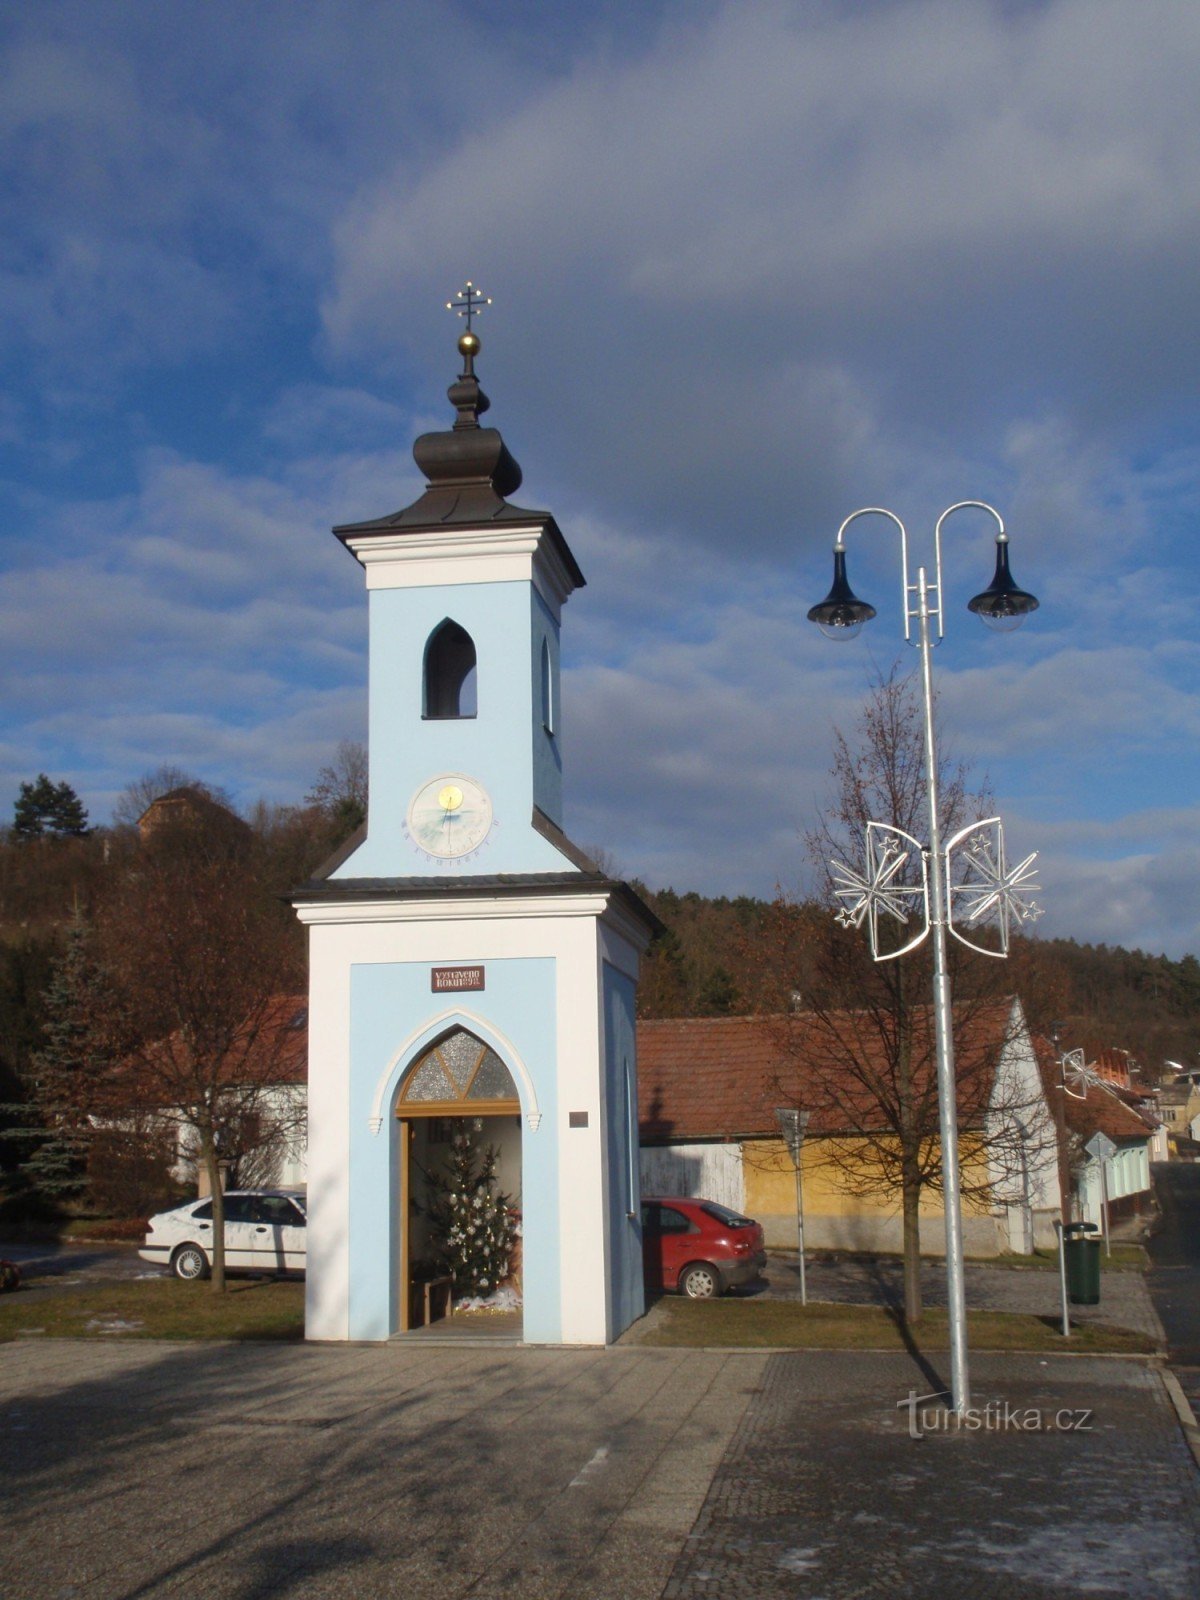 Small monuments in Horákov